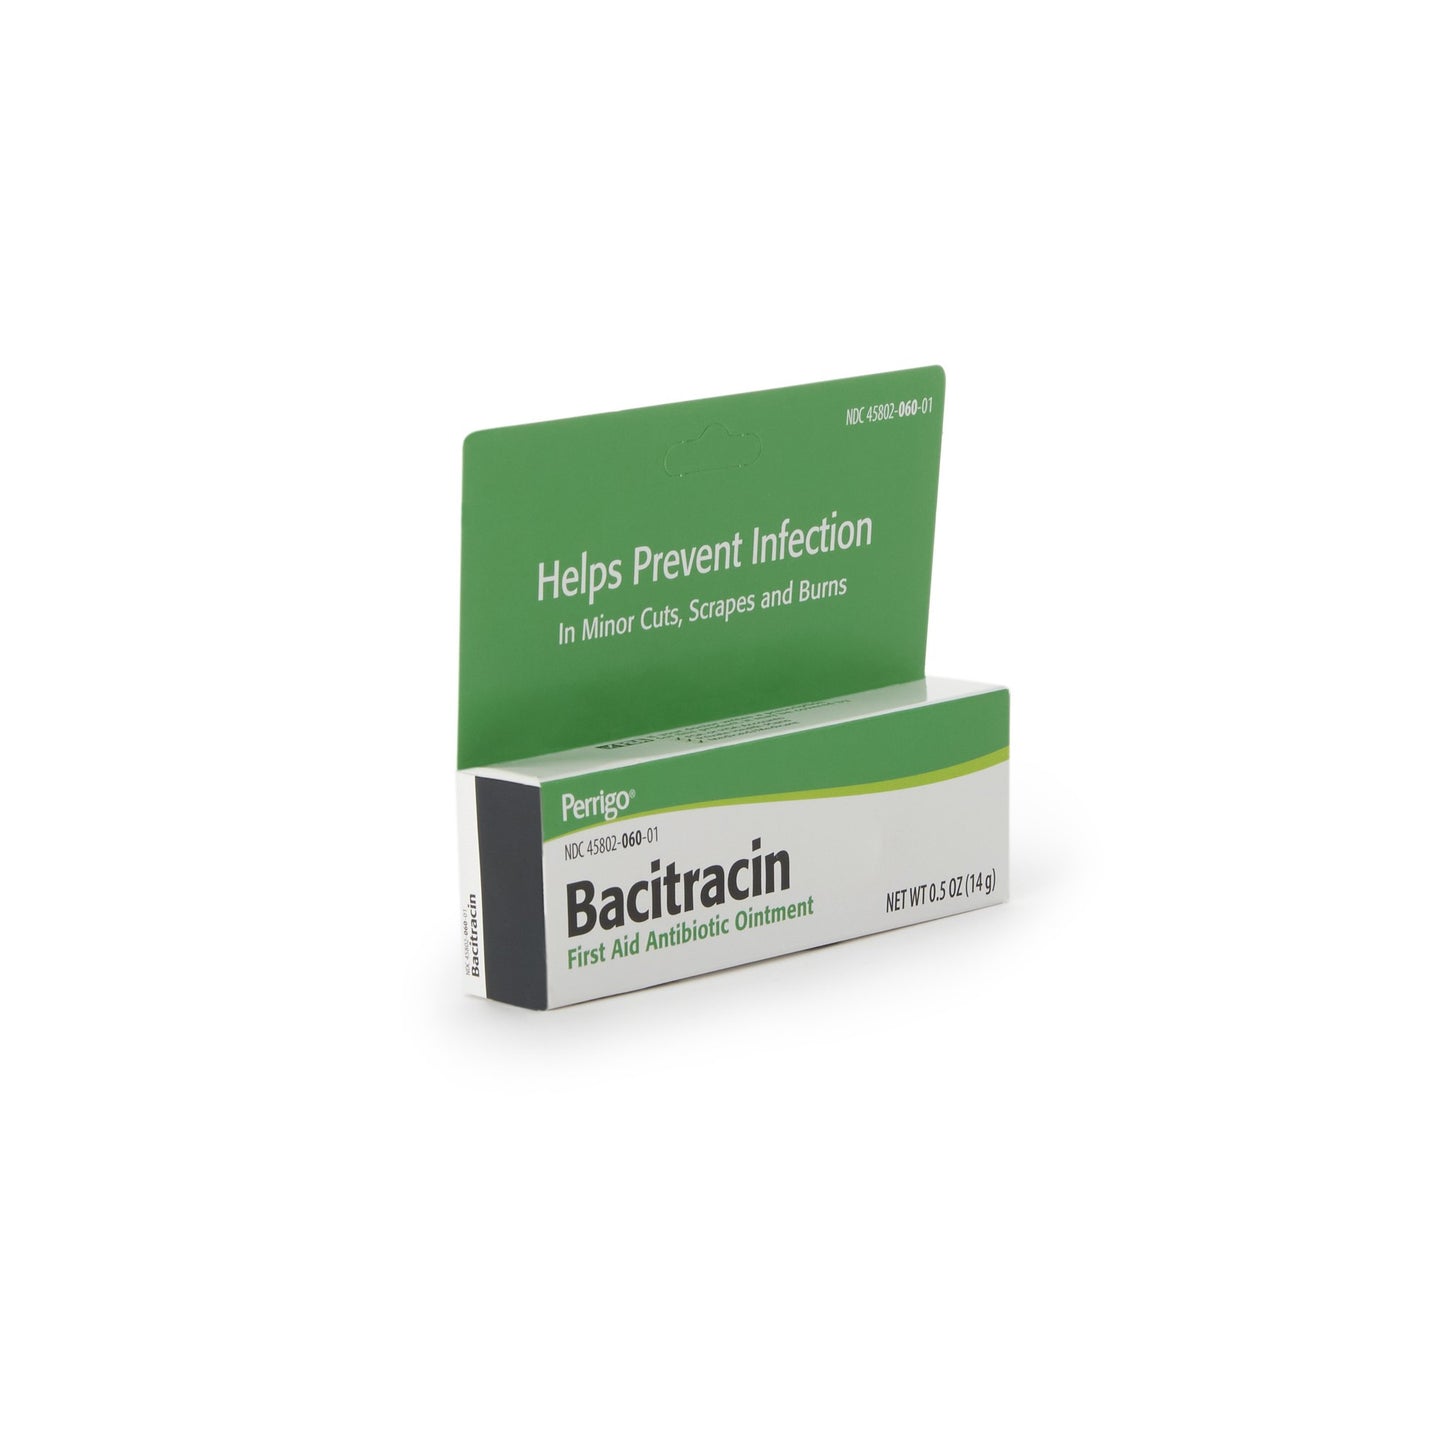 Bacitracin First Aid Antibiotic Ointment, 0.5 fl. oz.